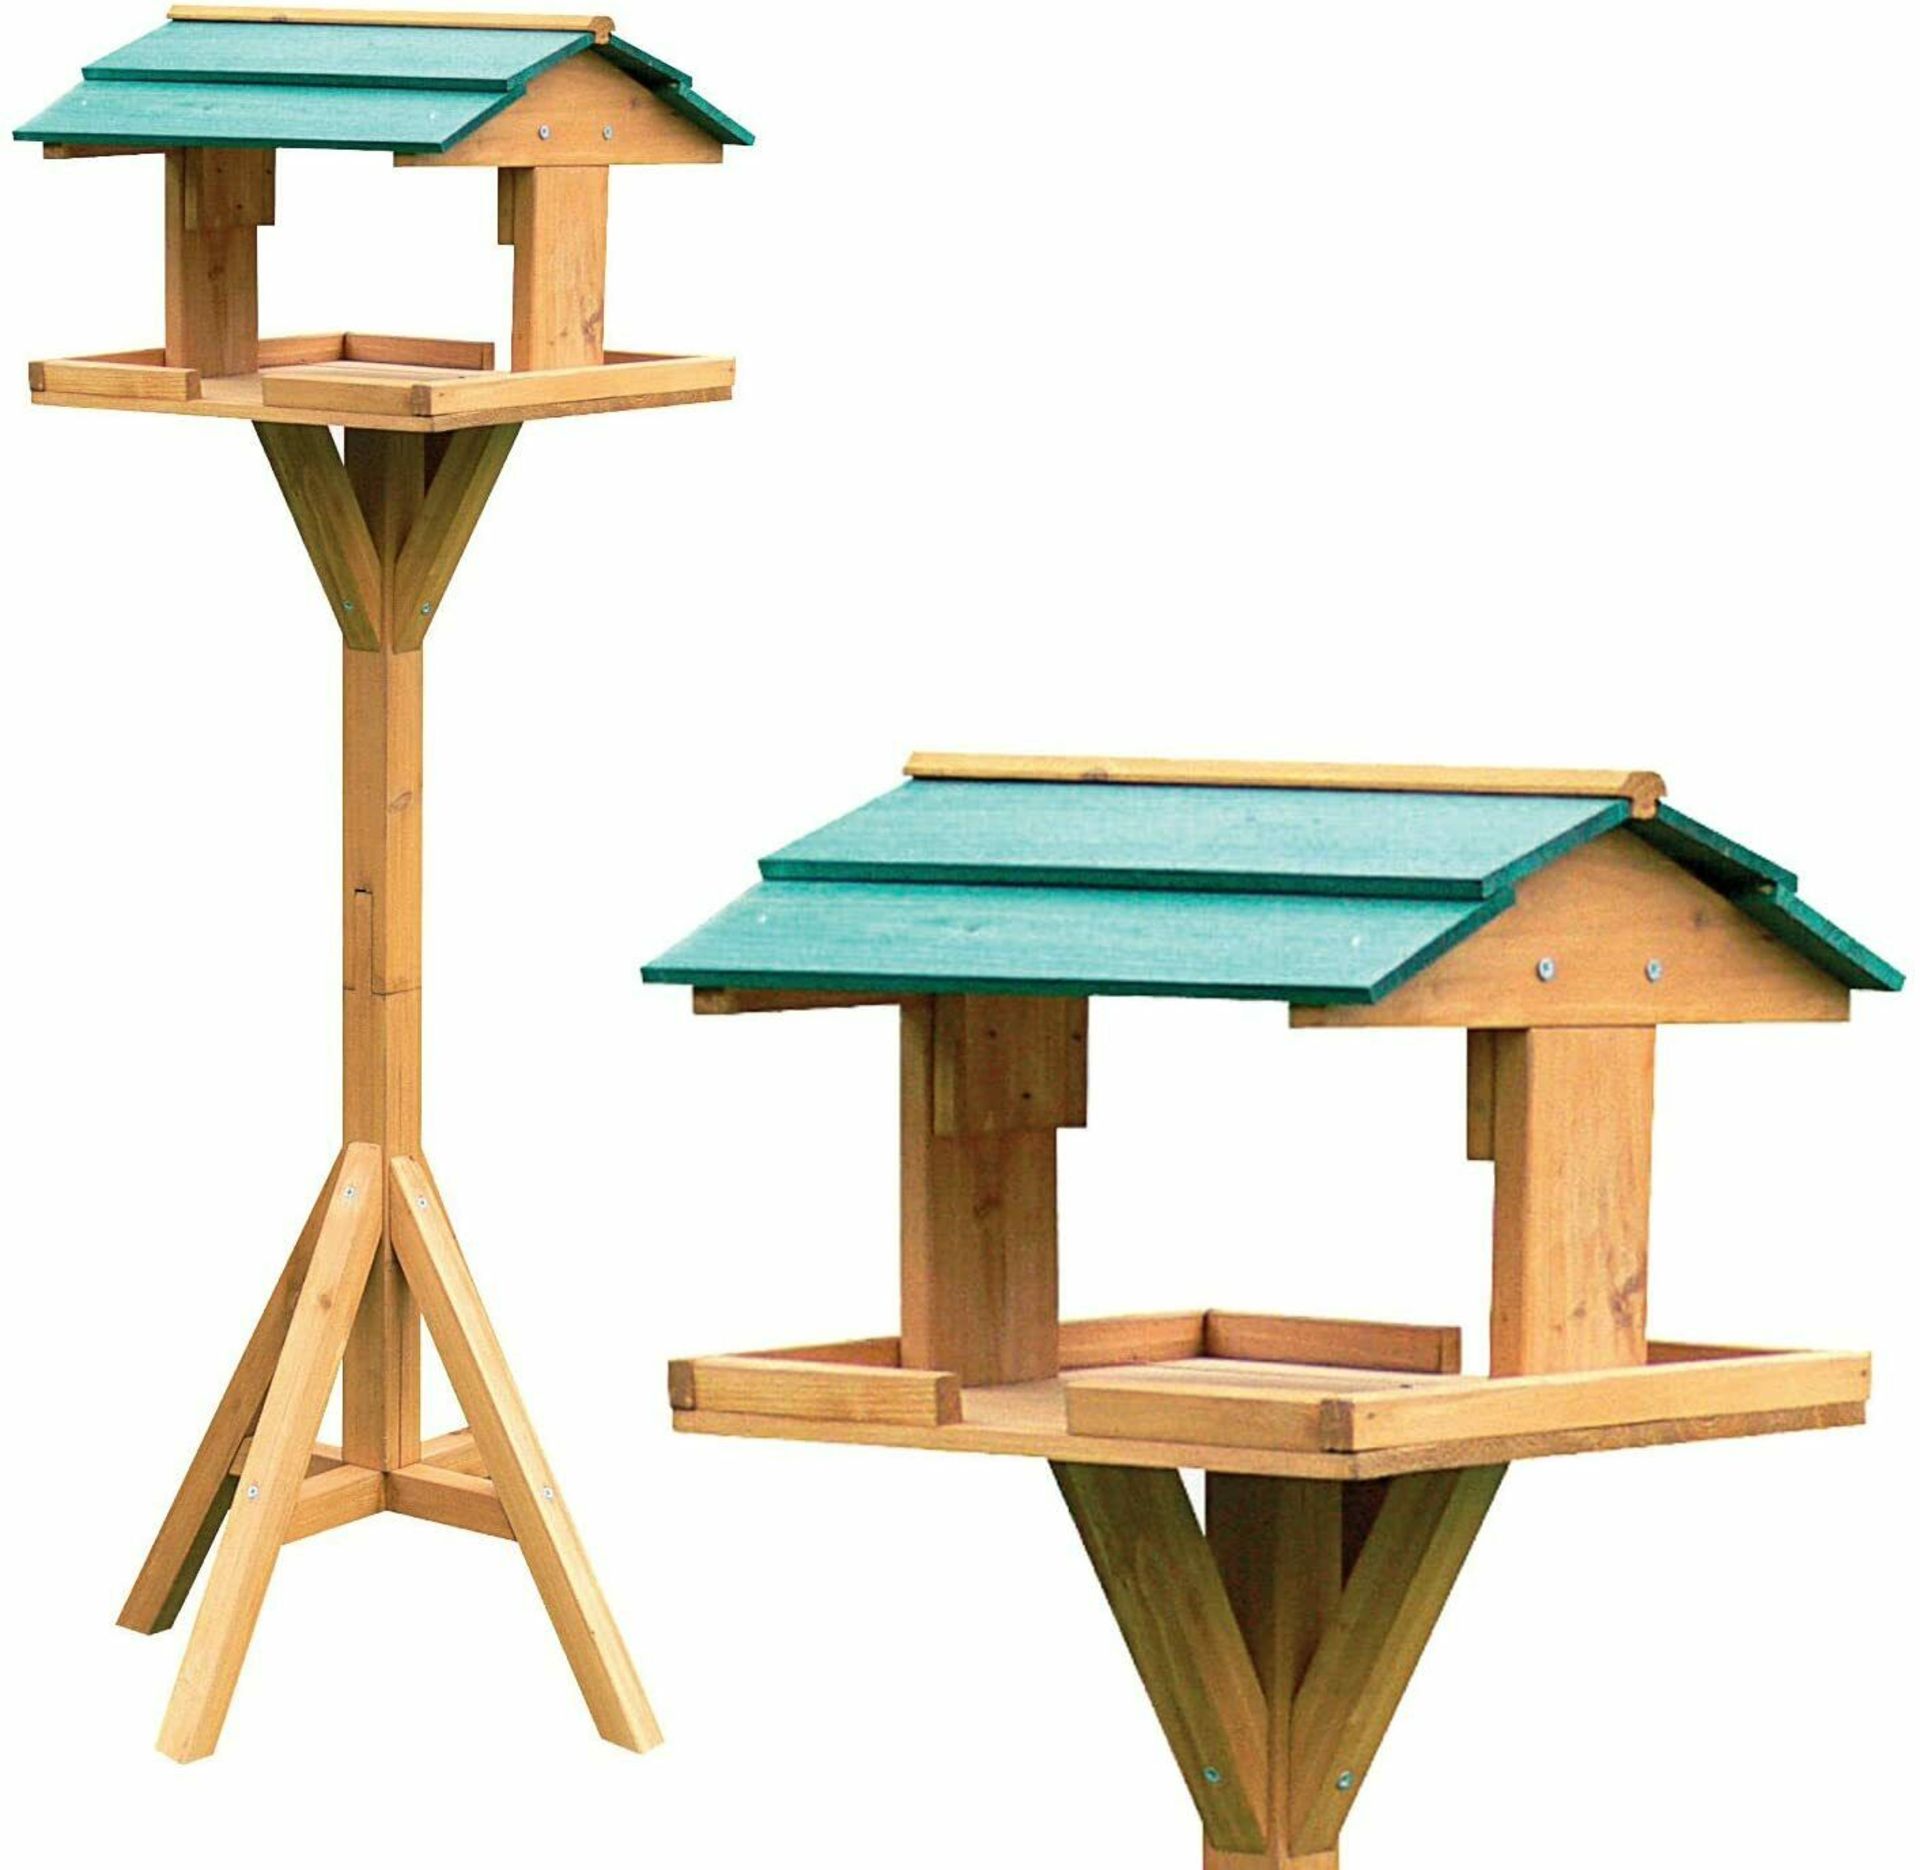 New 118cm Traditional Wooden Bird Feeding Table